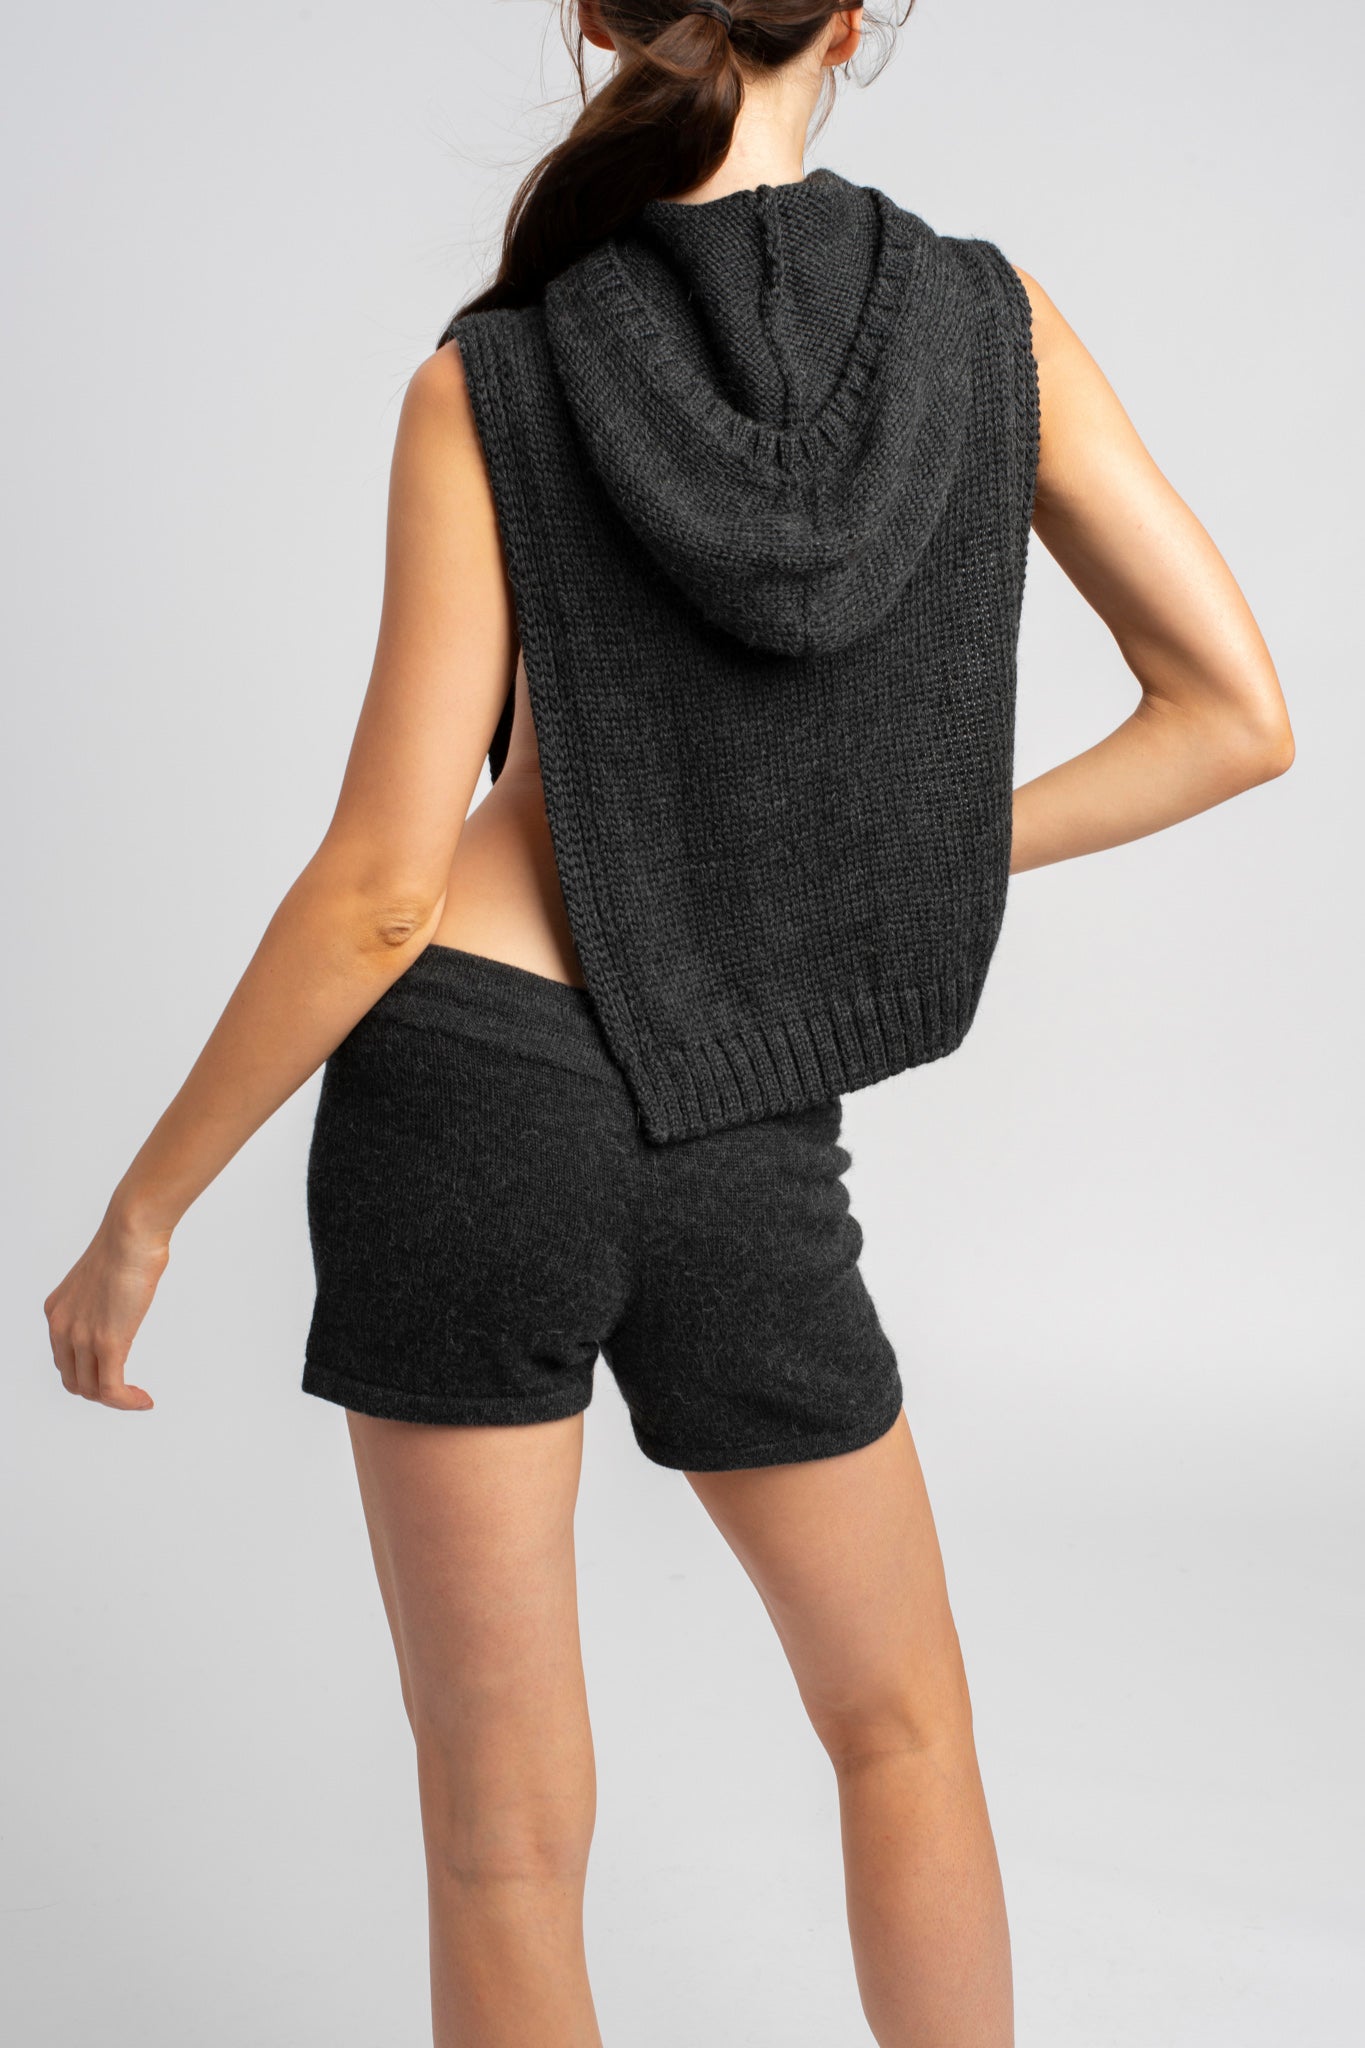 Model wearing poncho in dark grey alpaca wool, back